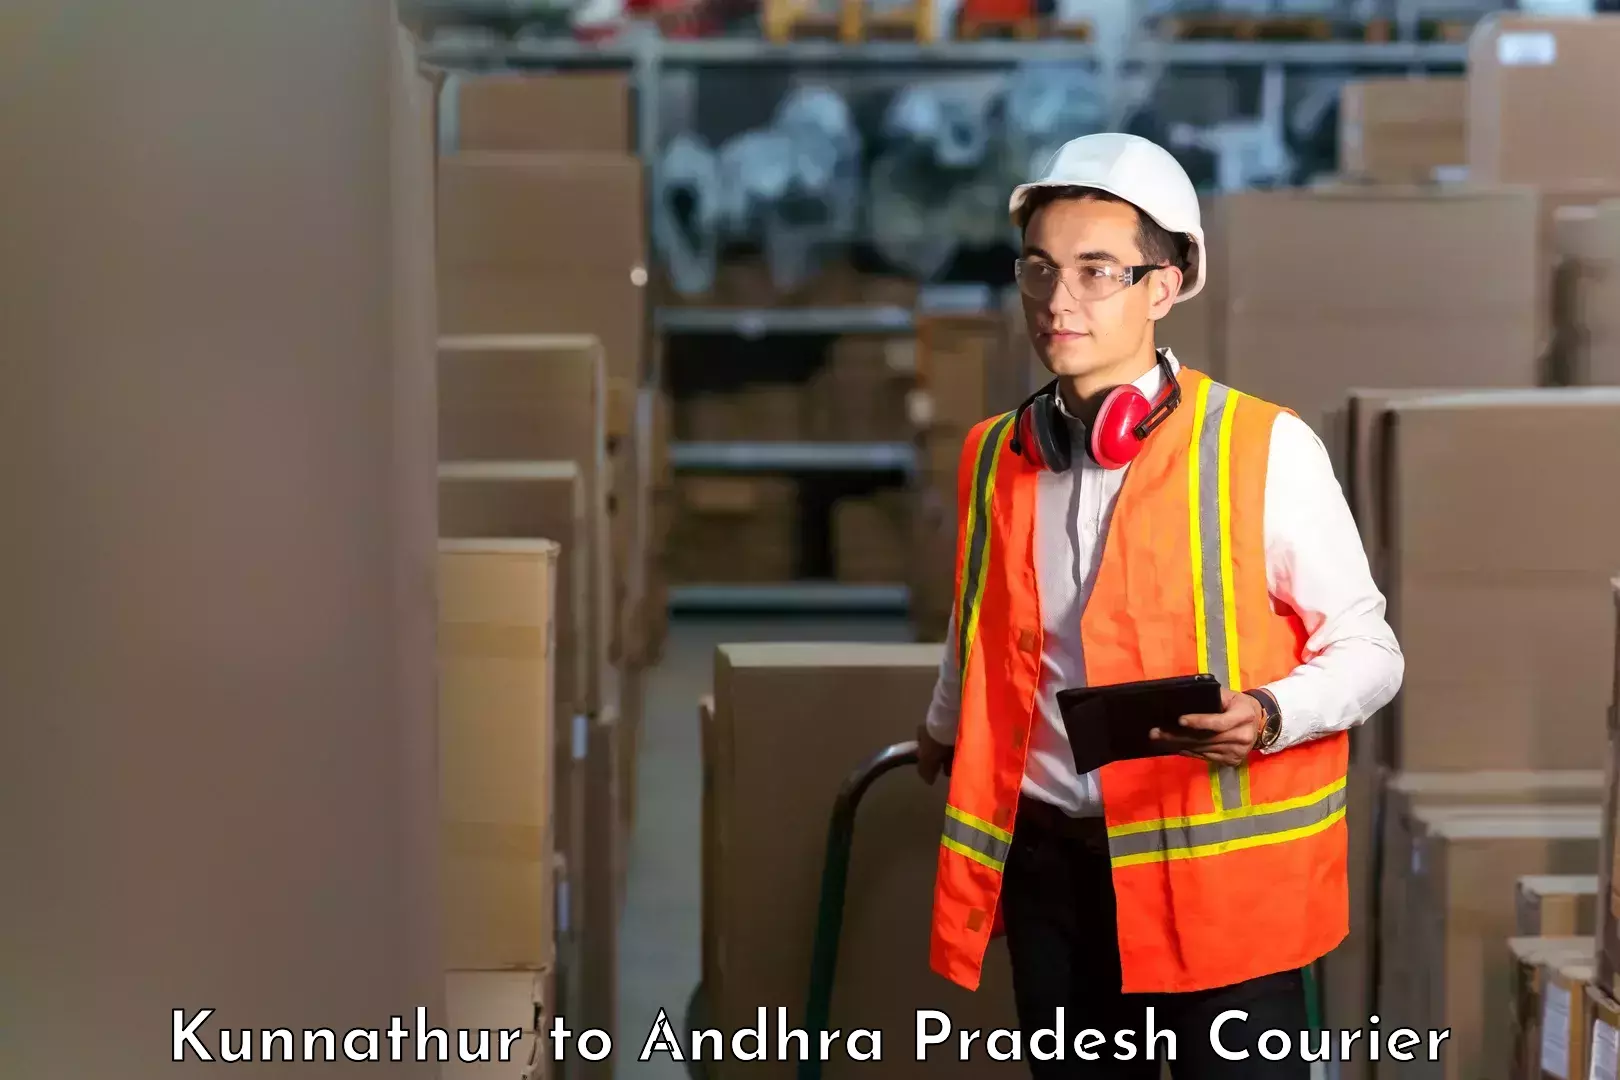 Courier service efficiency Kunnathur to Andhra Pradesh